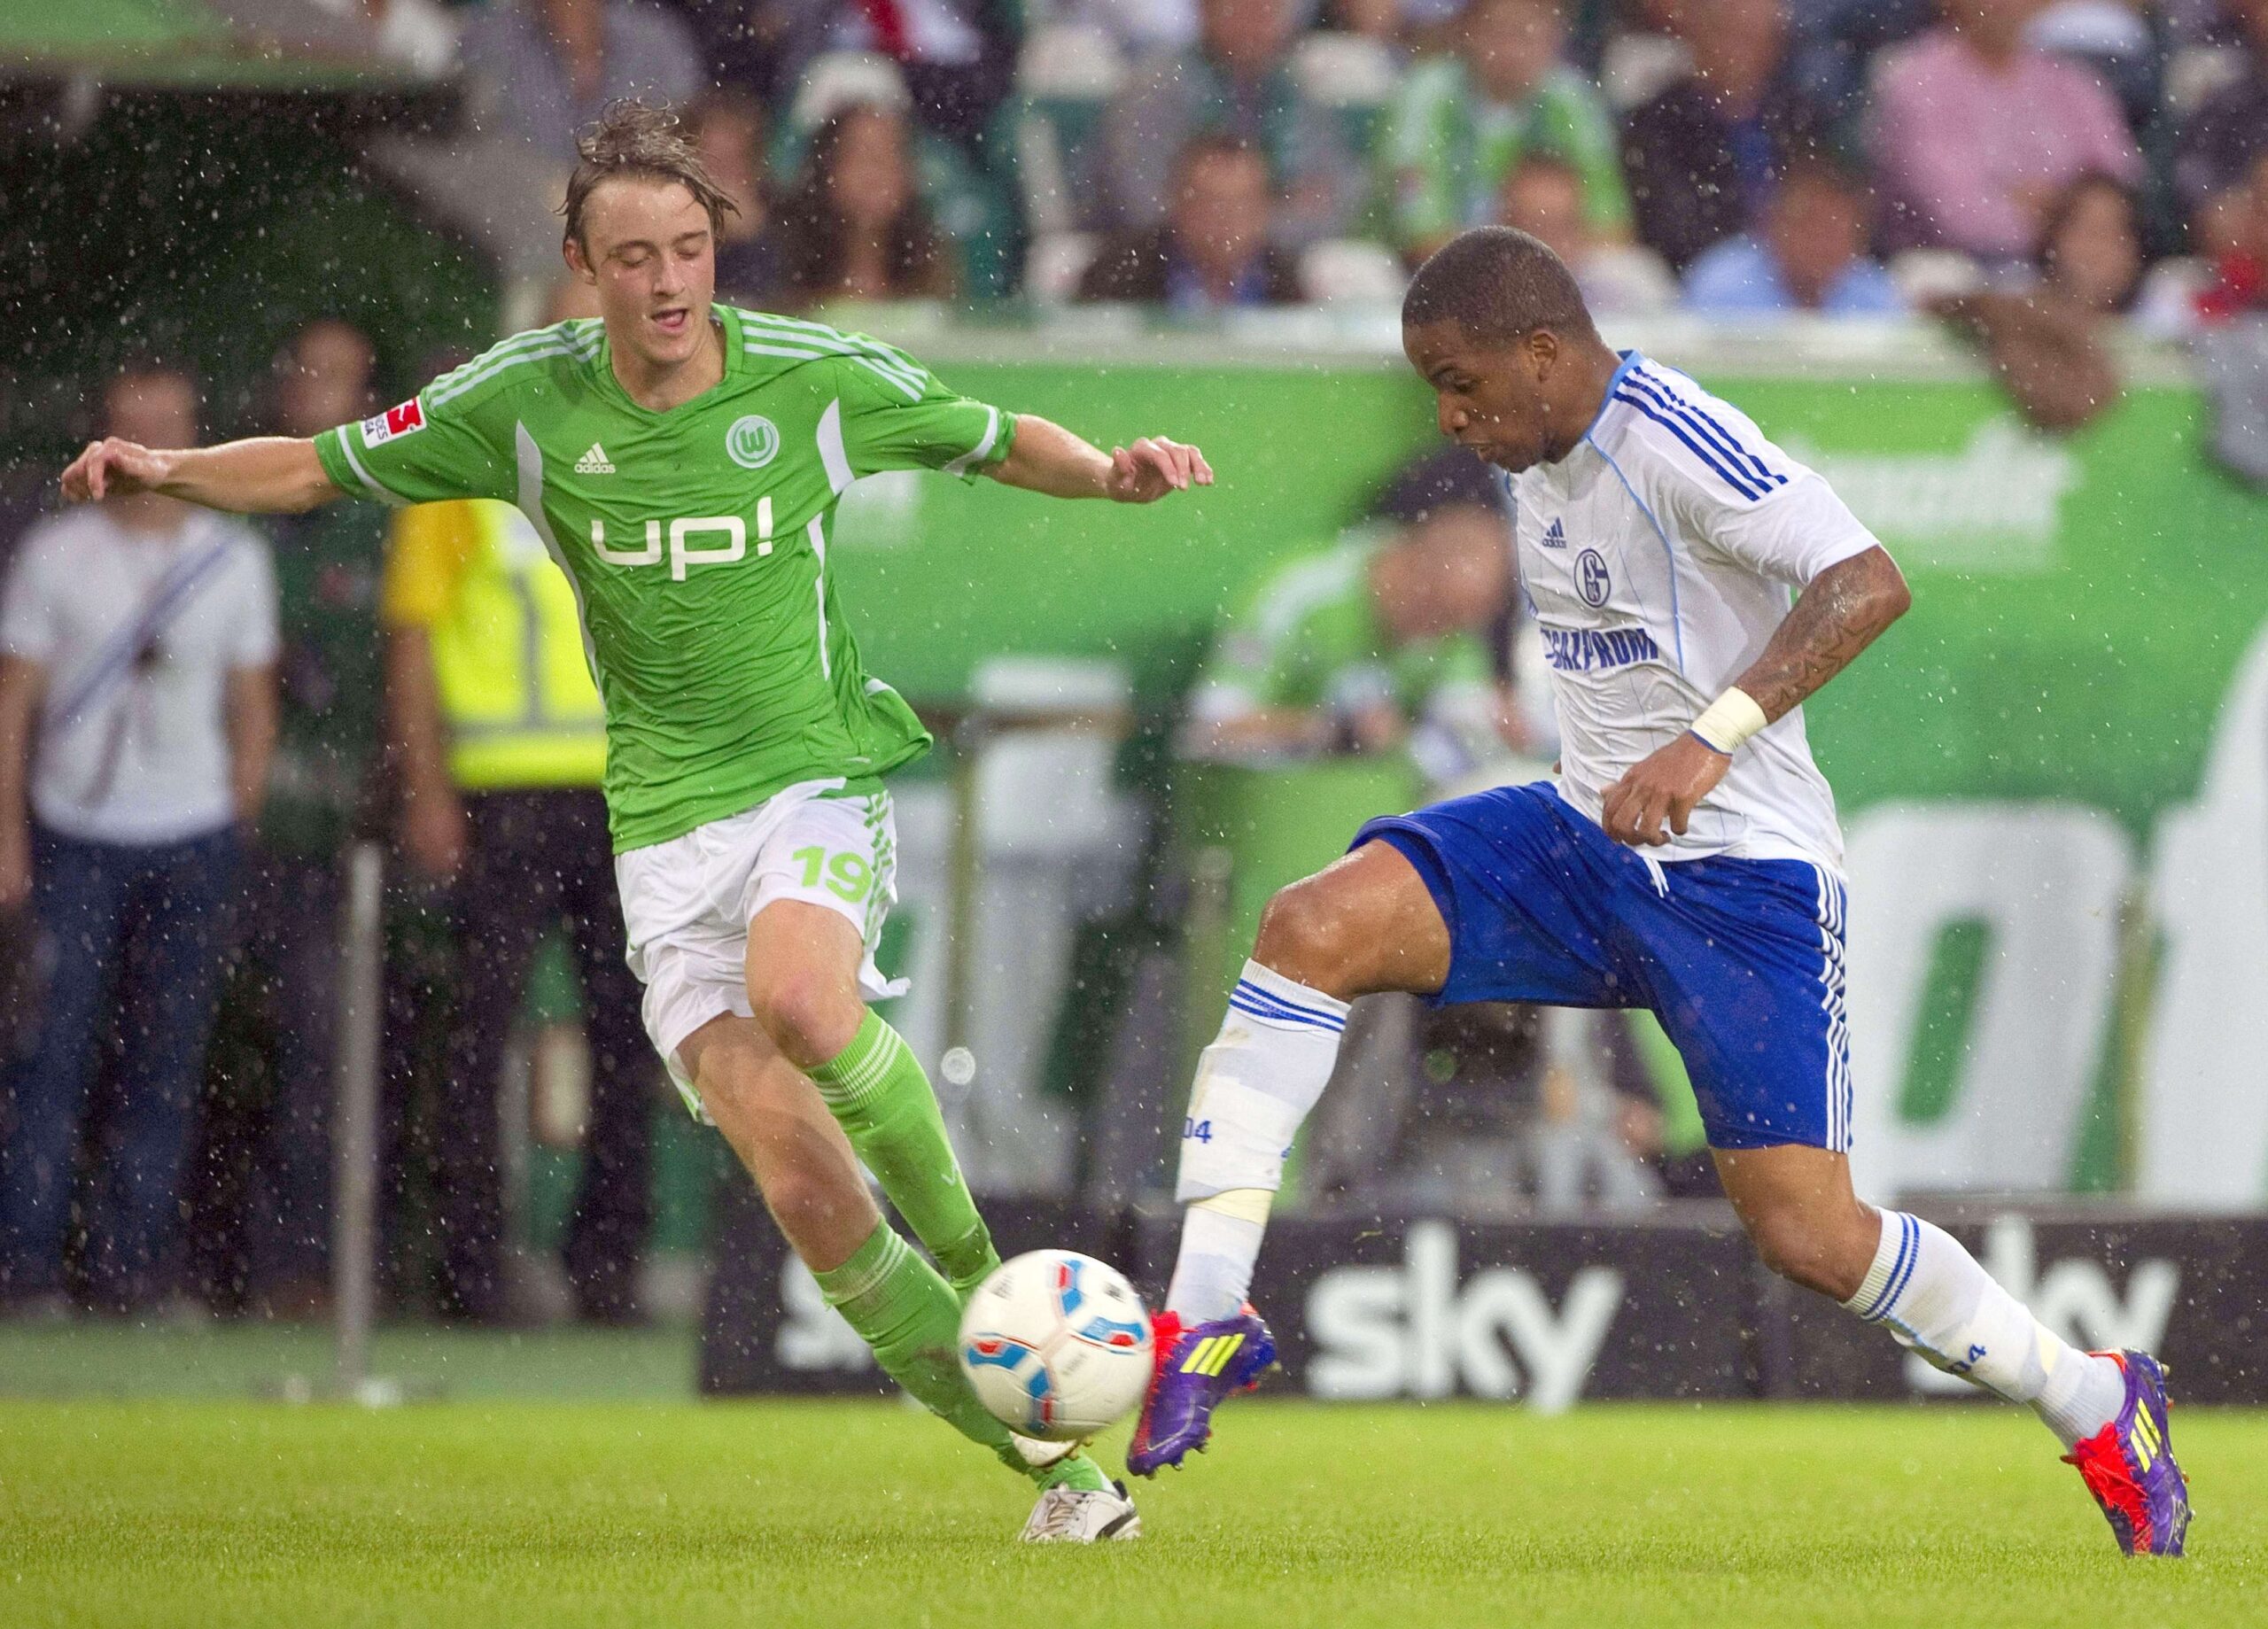 VfL Wolfsburg gegen Schalke 04, Endstand 2:1. Rasmus Jönsson gegen Jefferson Farfan.